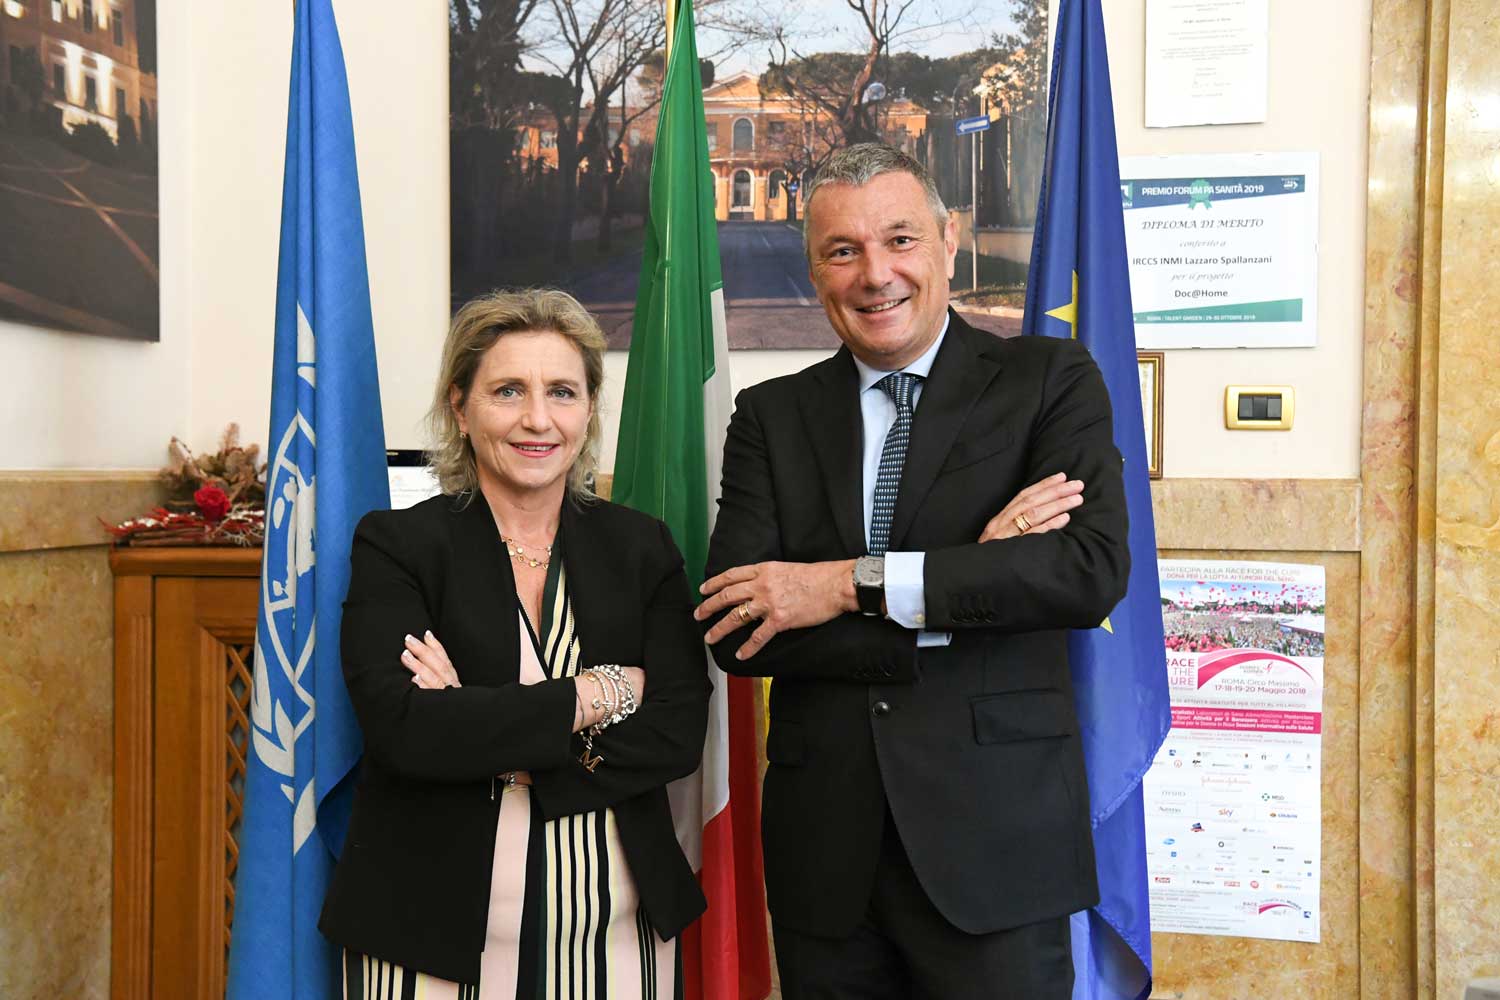 Marta Branca, General Manager of Spallanzani with Bulgari CEO, Jean-Christophe Babin